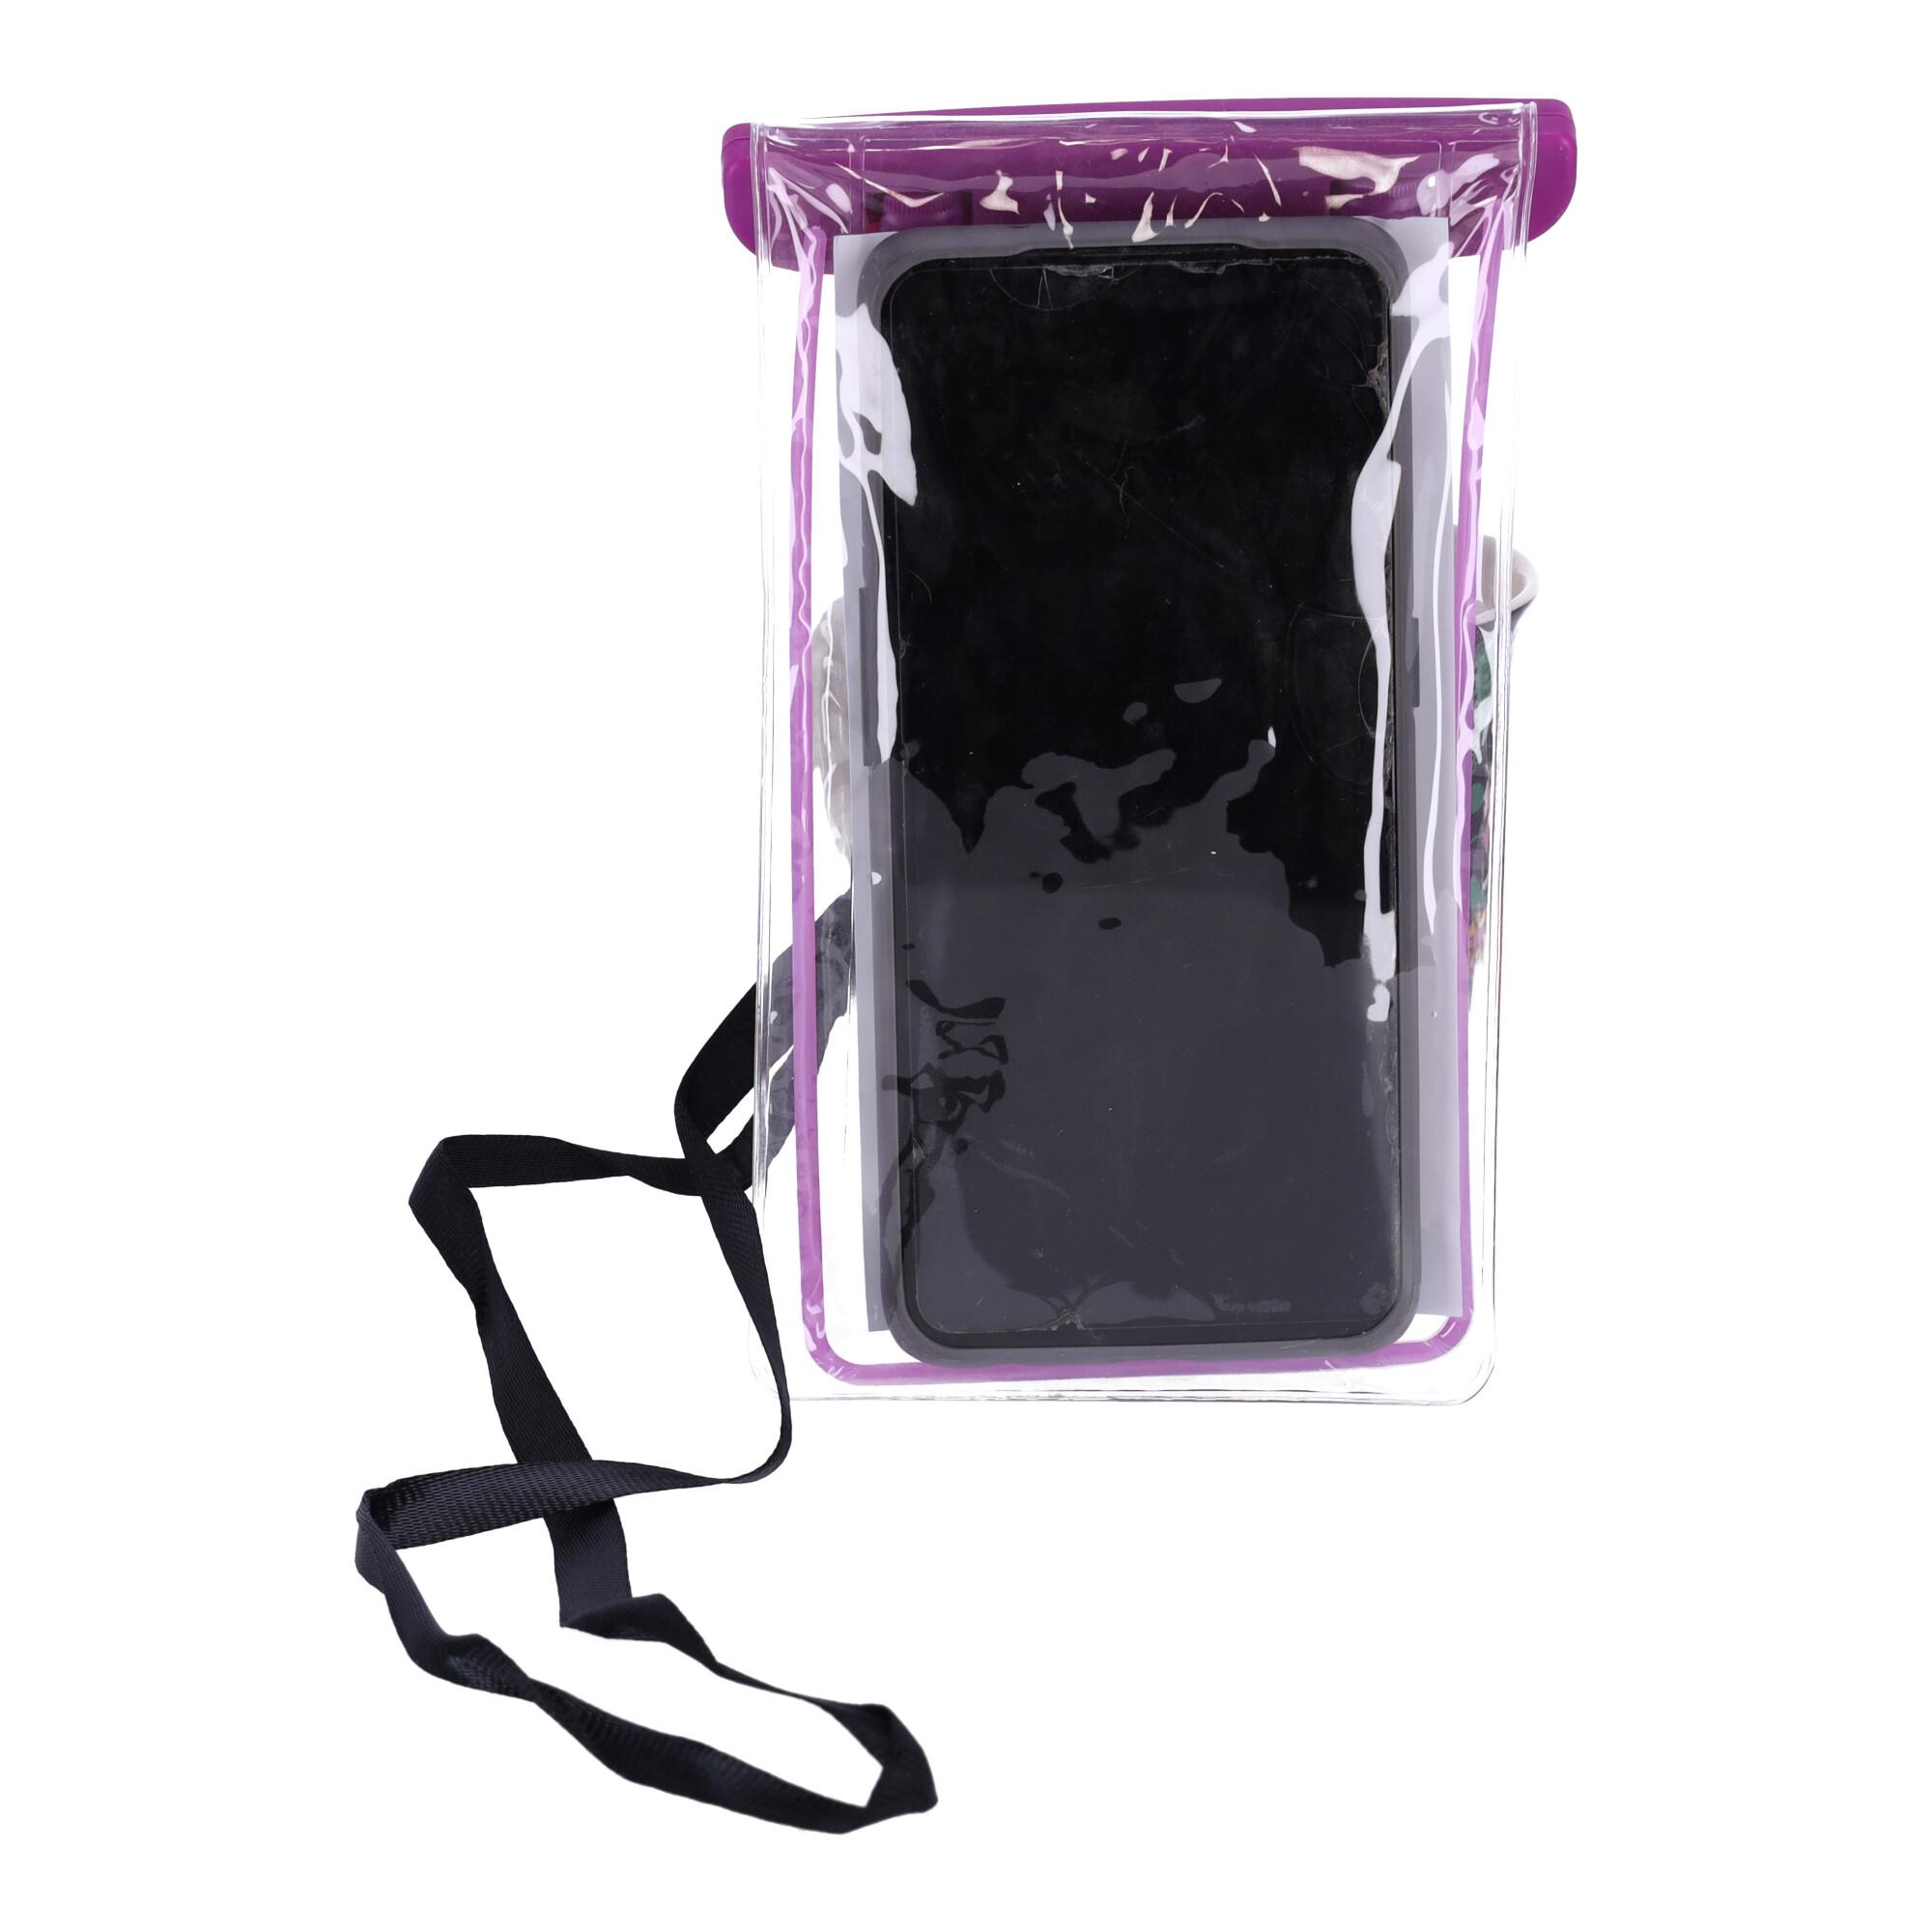 Waterproof universal case, phone cover - purple